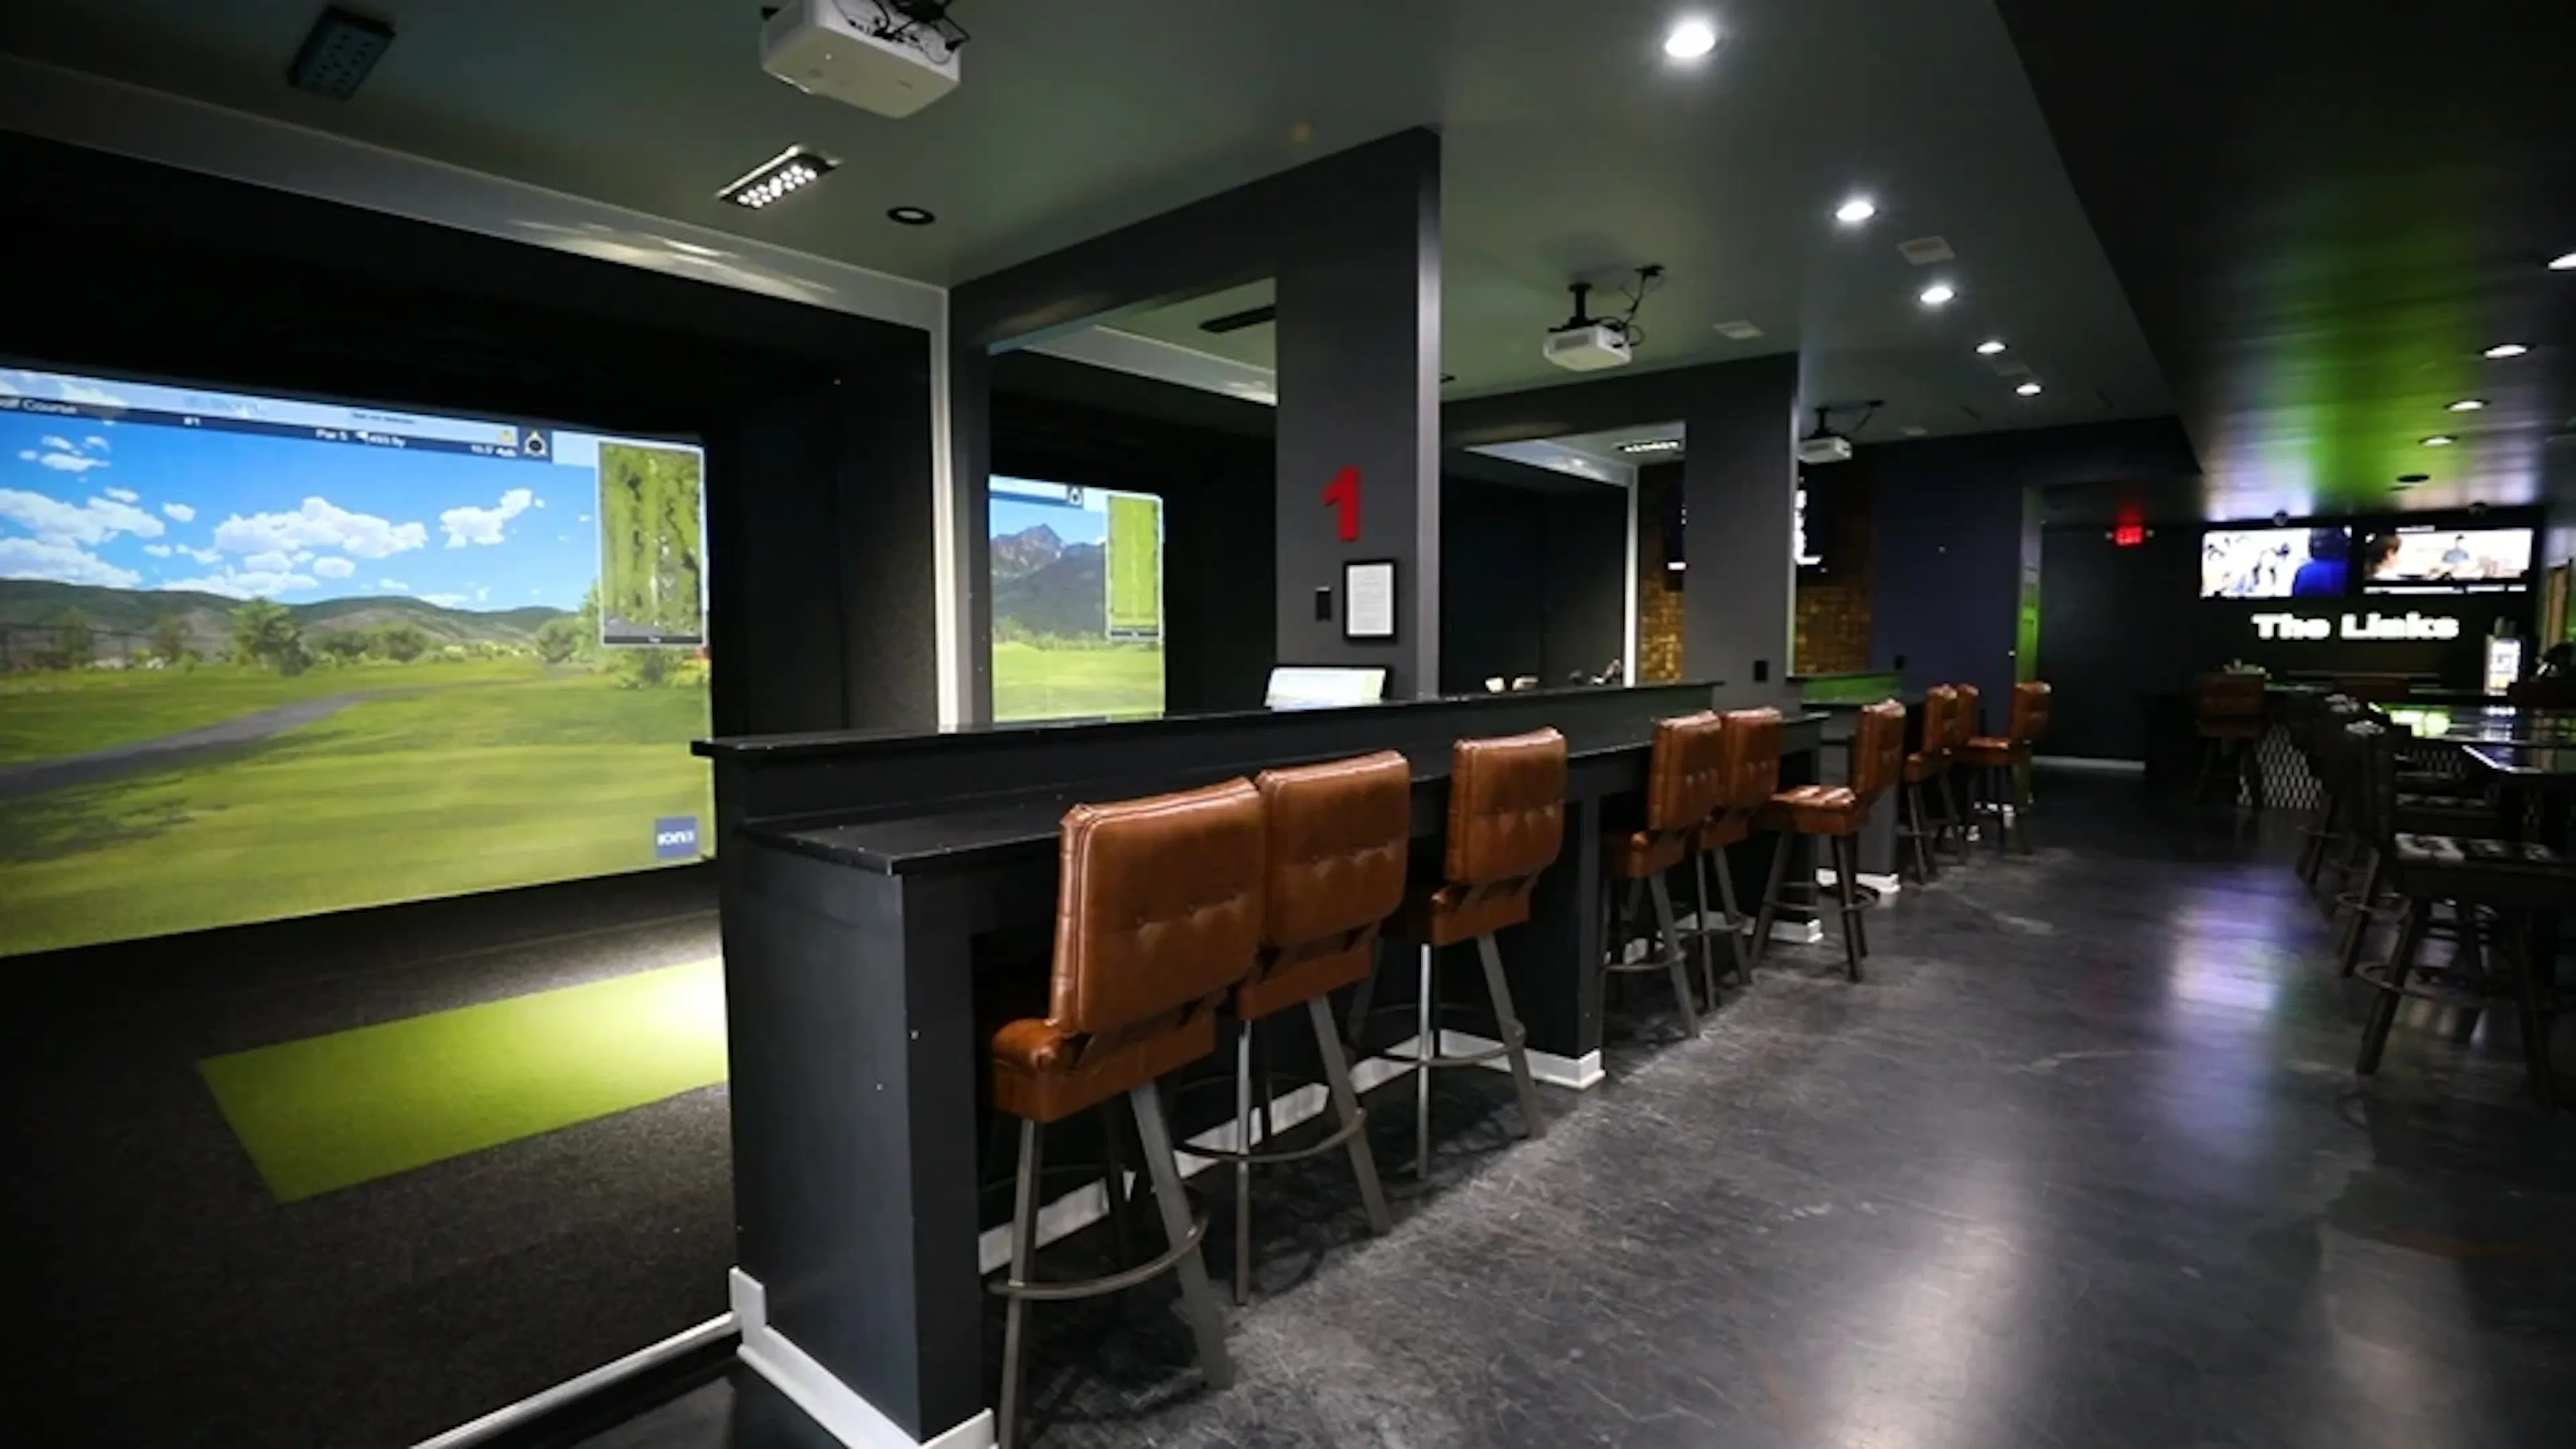 the links nwi indoor golf simulators